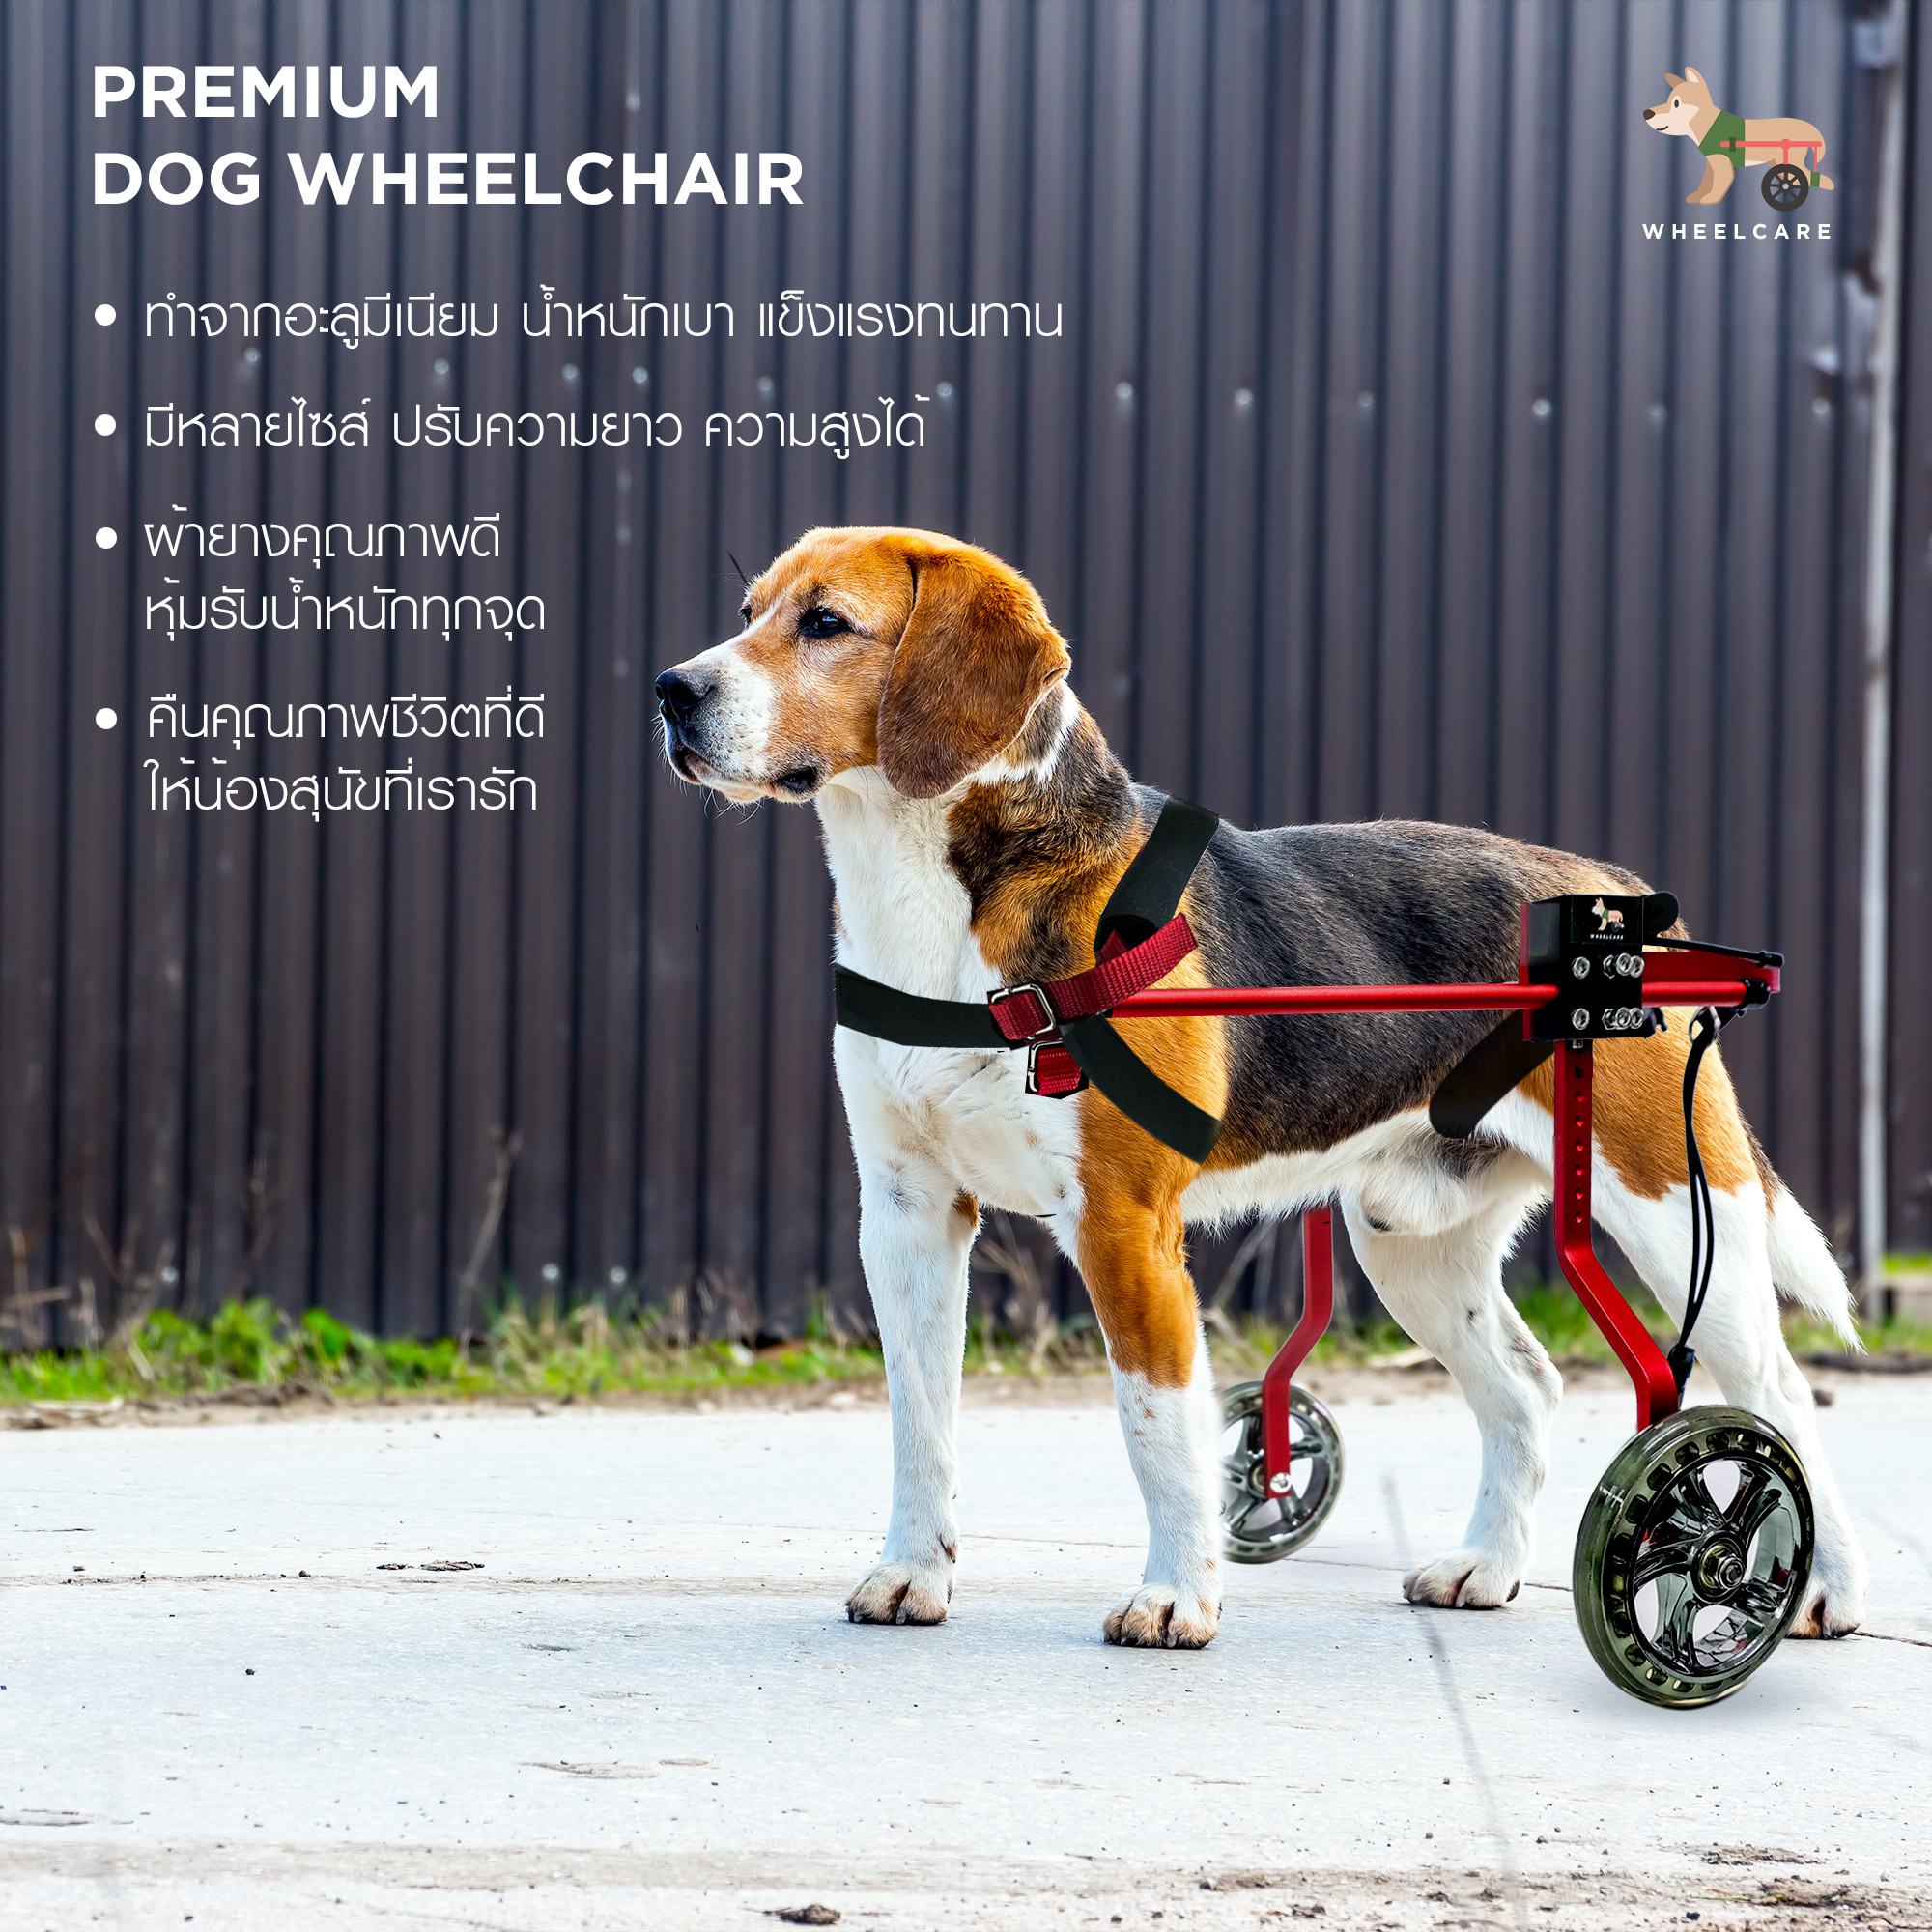 WHEELCARE - wheelchair dog วีลแชร์ รถเข็น สำหรับสัตว์พิการขาหลัง ทำจากอลูมิเนียมอัลลอยด์ คุณภาพสูง มีหลายขนาดปรับได้ตามรูปร่าง (สีแดง WR-1)